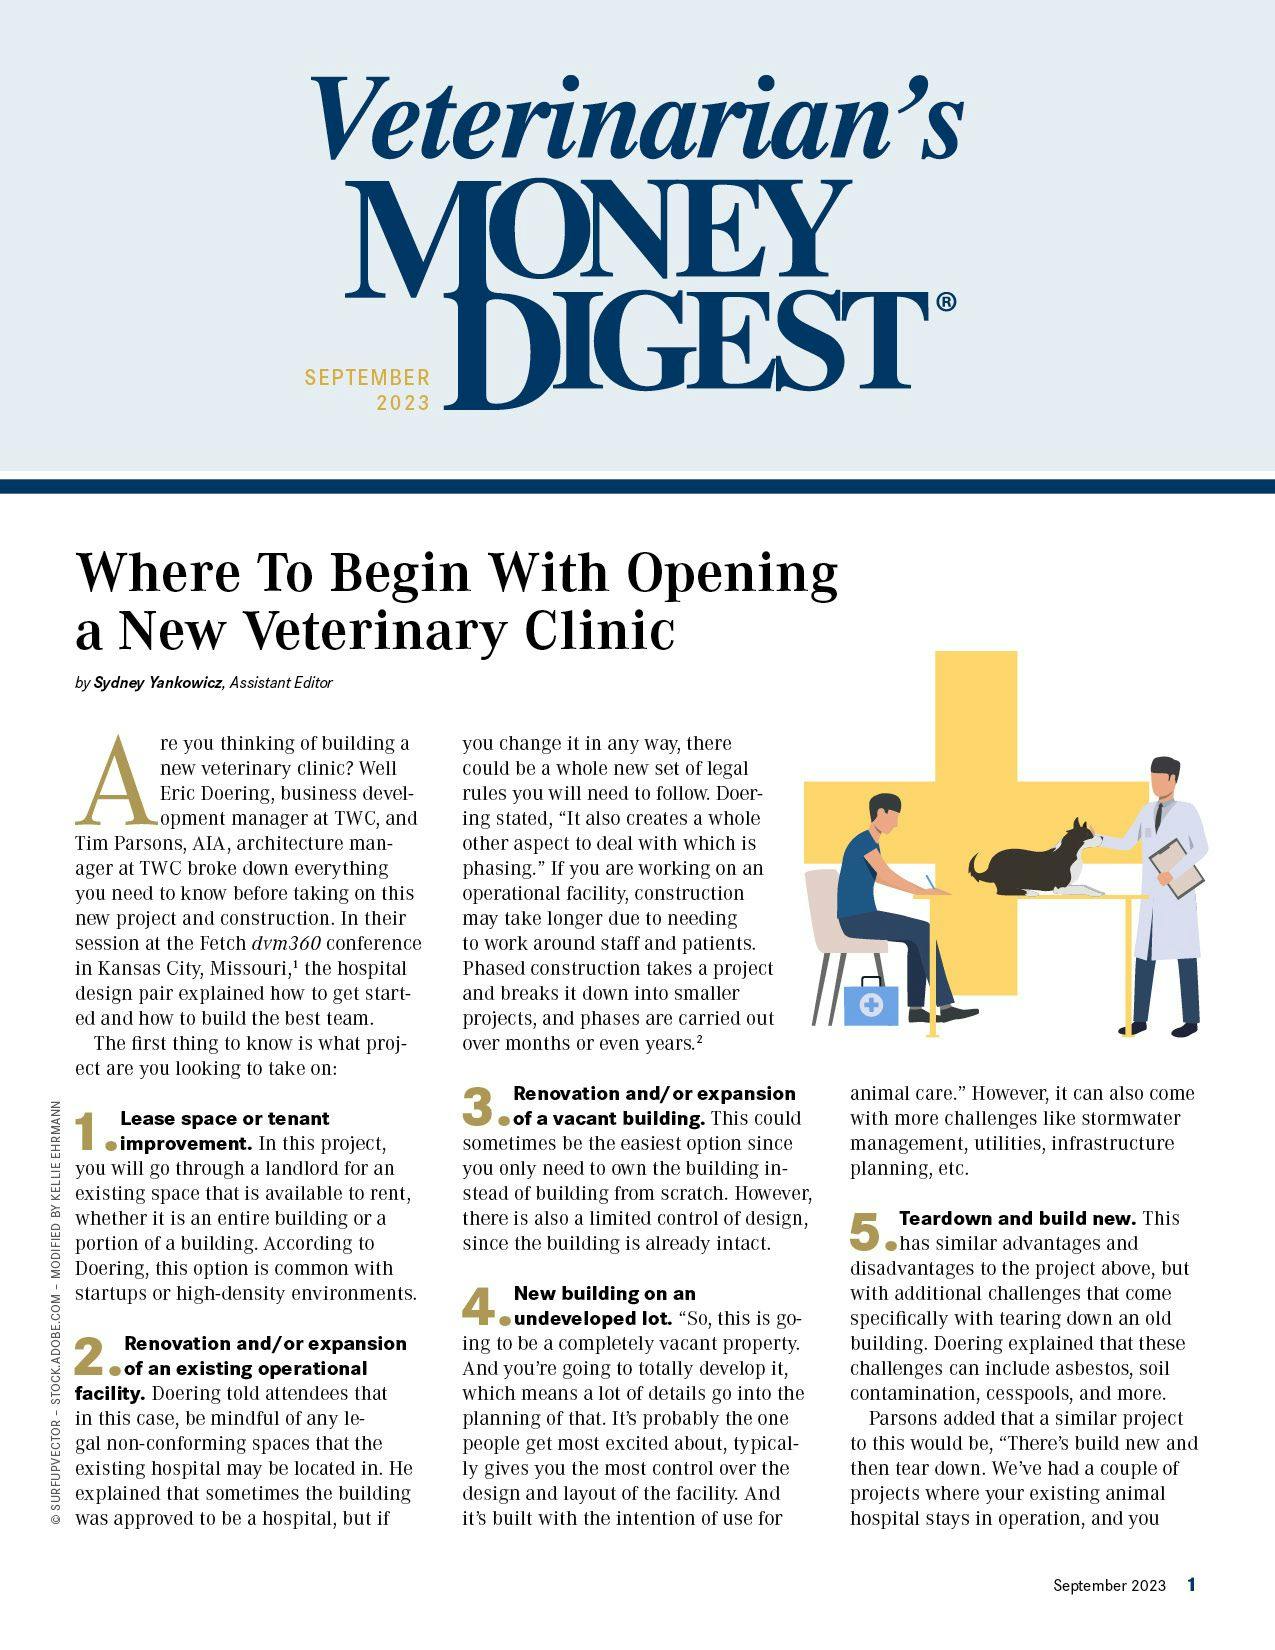 Veterinarian's Money Digest® (September 2023)